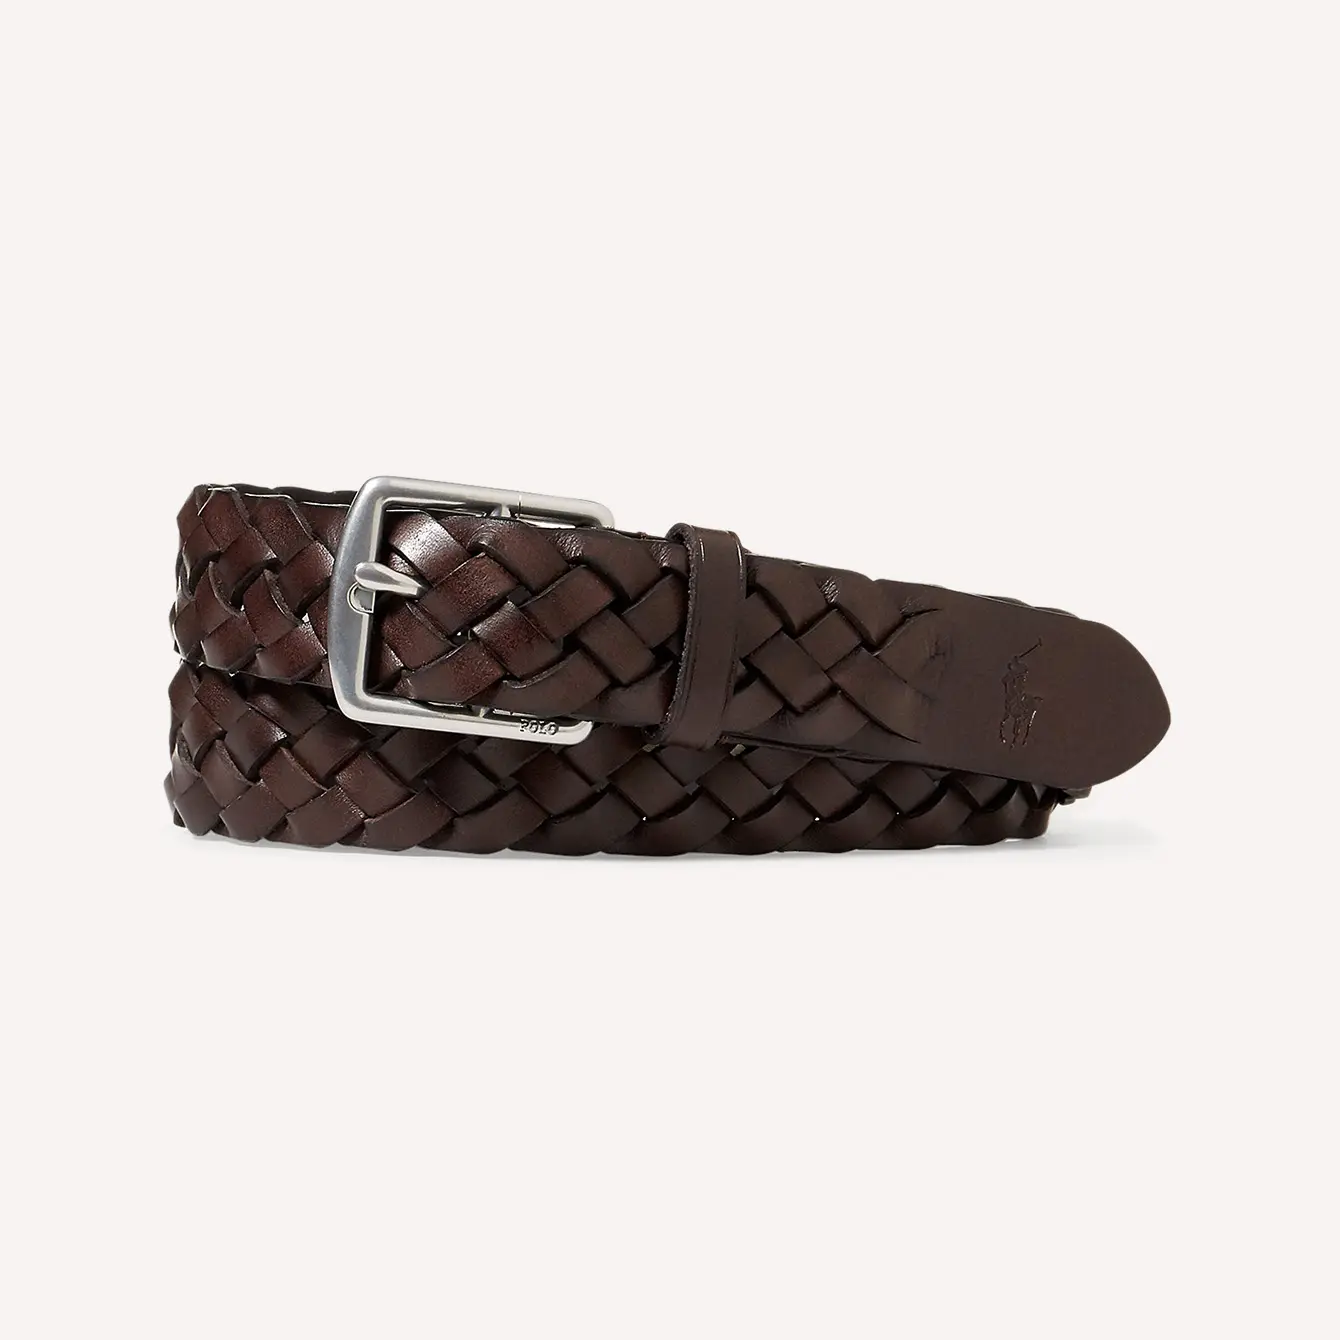 Polo Ralph Lauren Braided Leather Belt